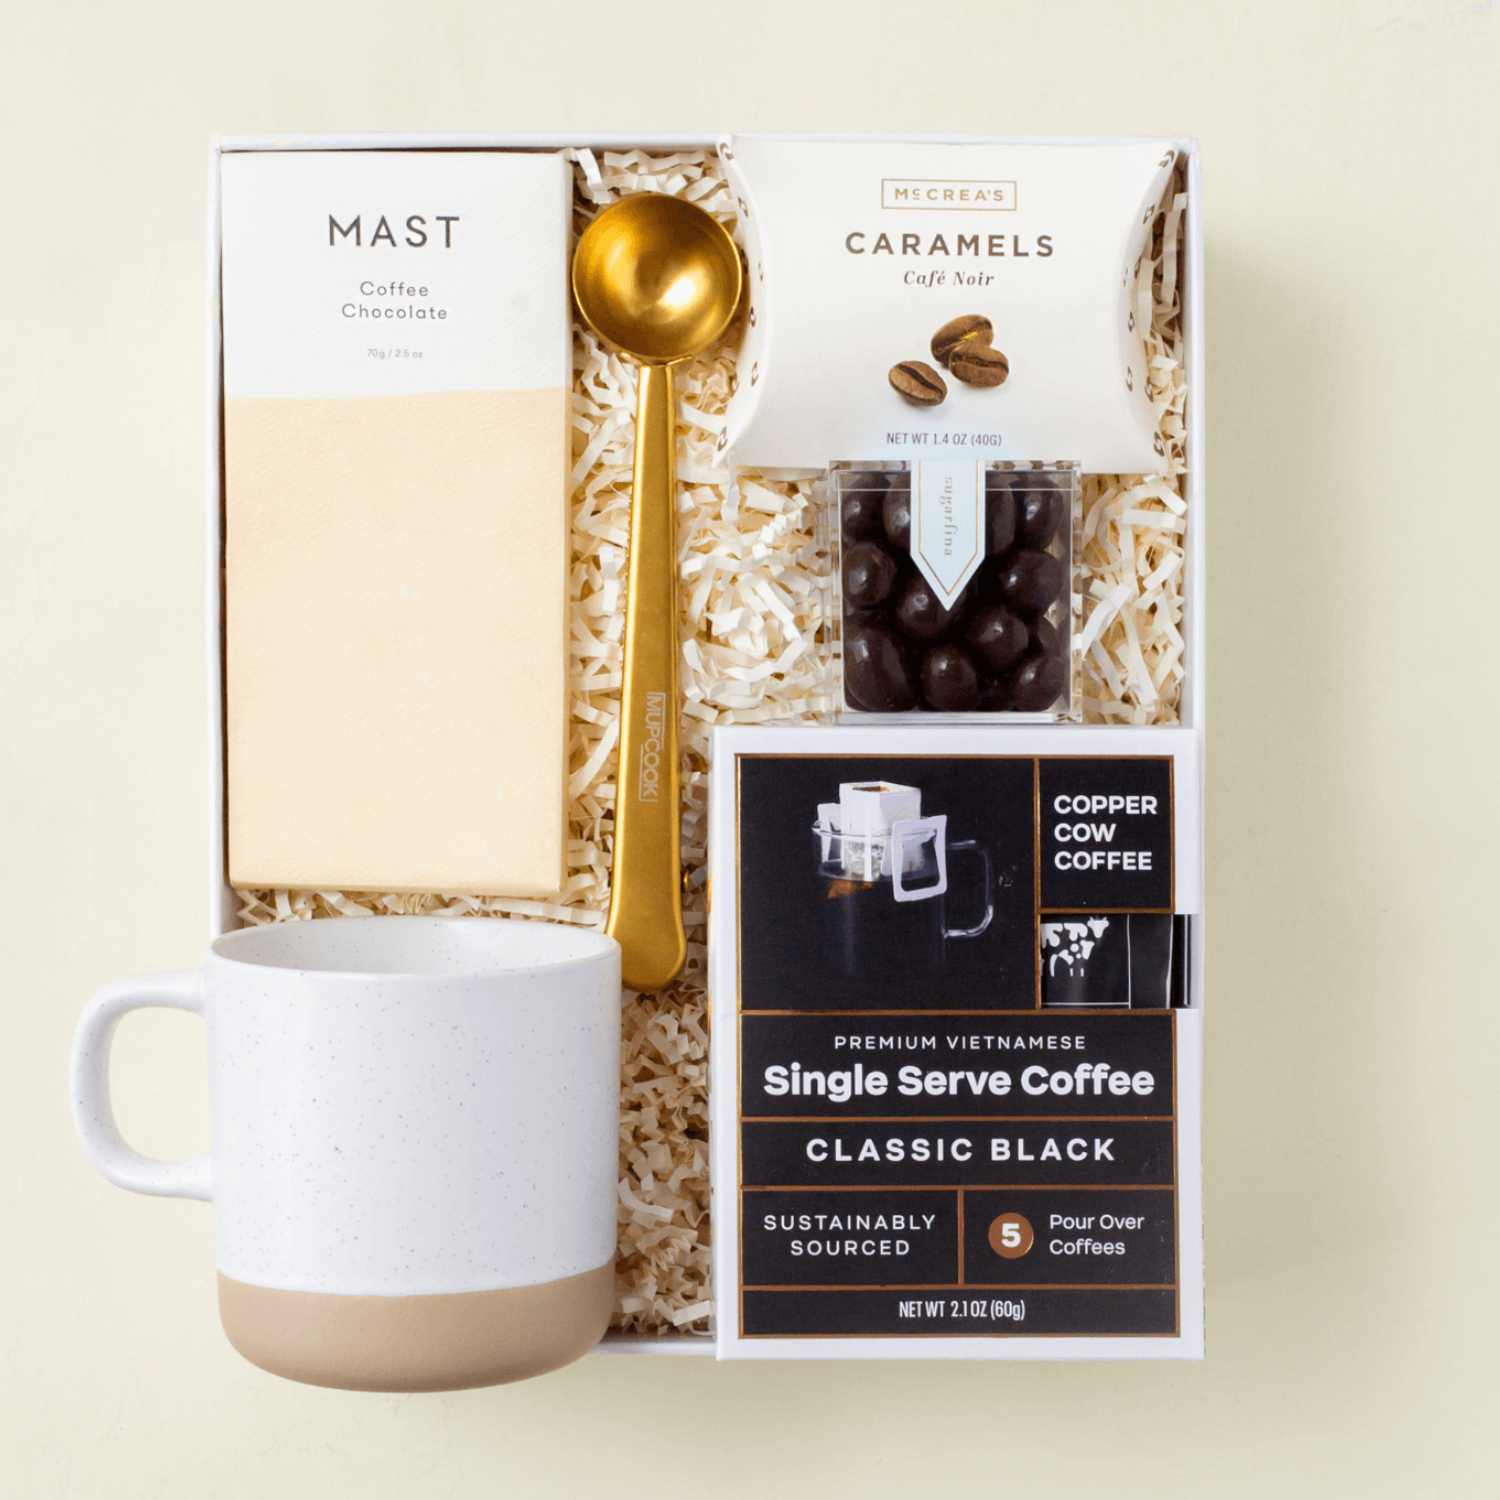 Chocolate and Coffee Gift Box Set